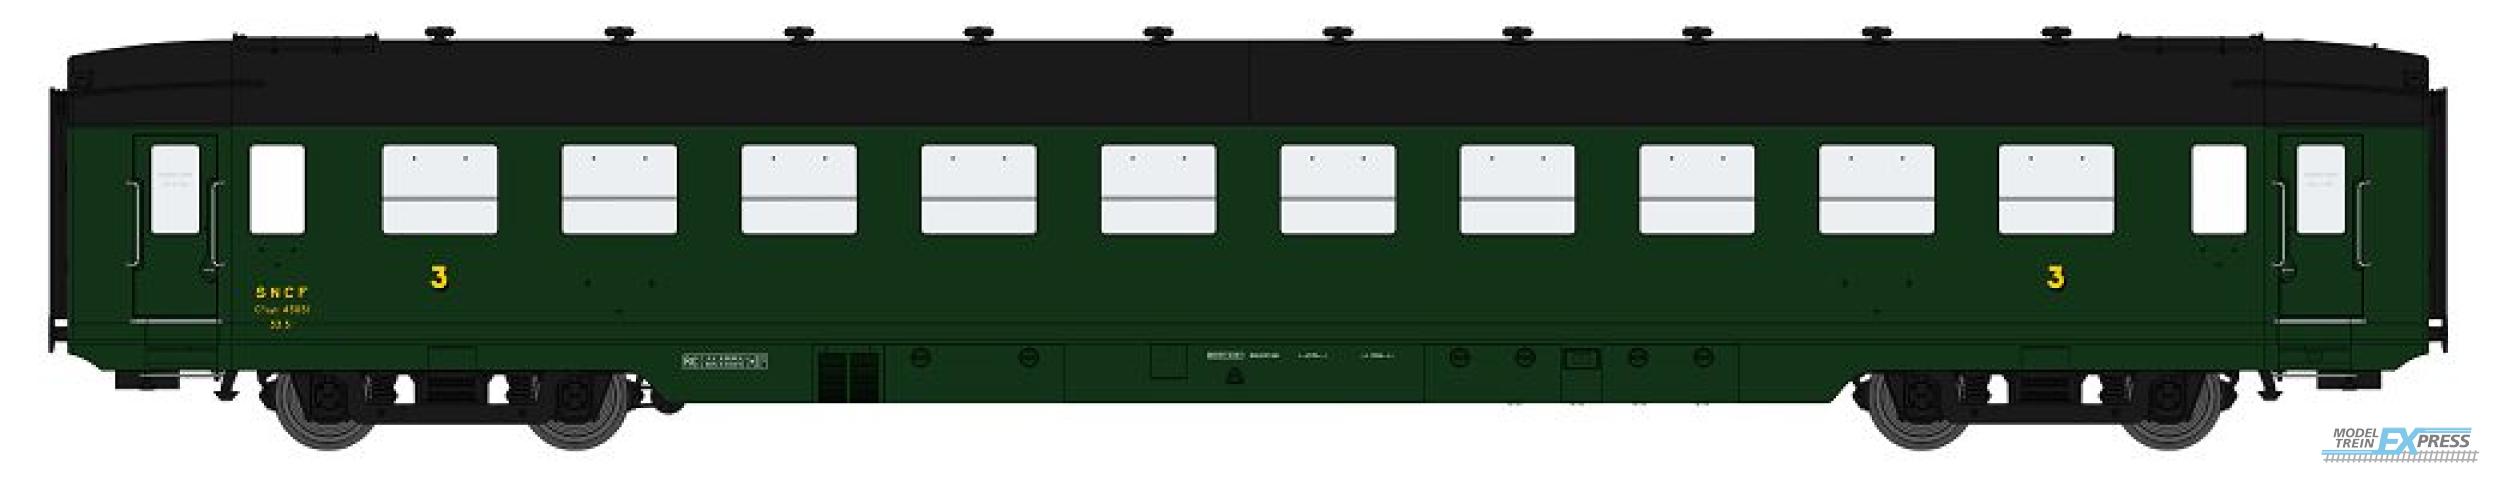 REE models VB-128 DEV AO U46 C10 Green 306, black frame, black roof, Long skirt Era IIIA - REE COLLECTION